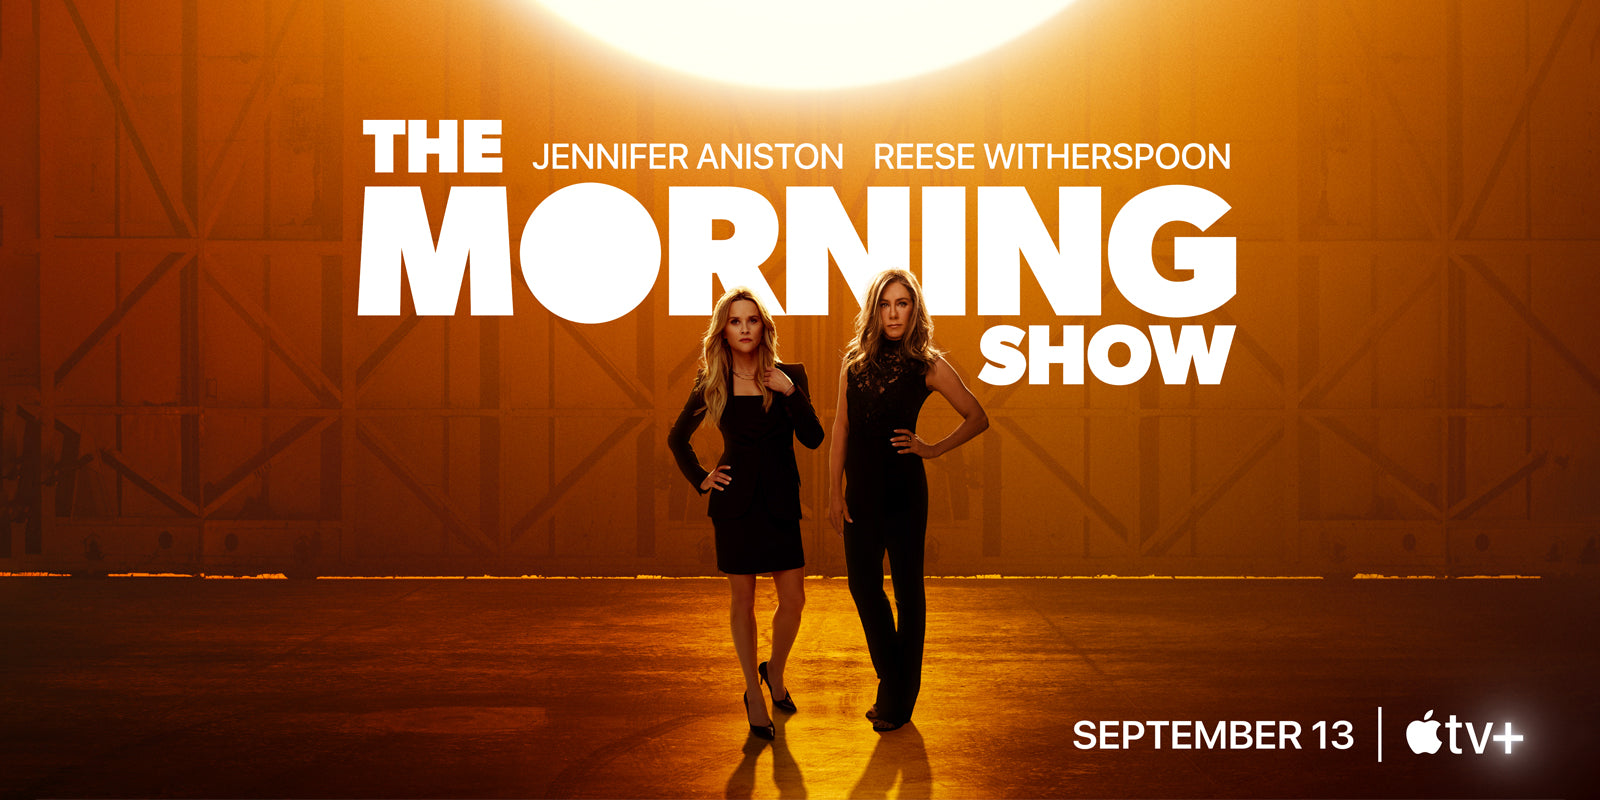 Drama met Jennifer Aniston en Reese Witherspoon in 'The Morning Show' seizoen 3